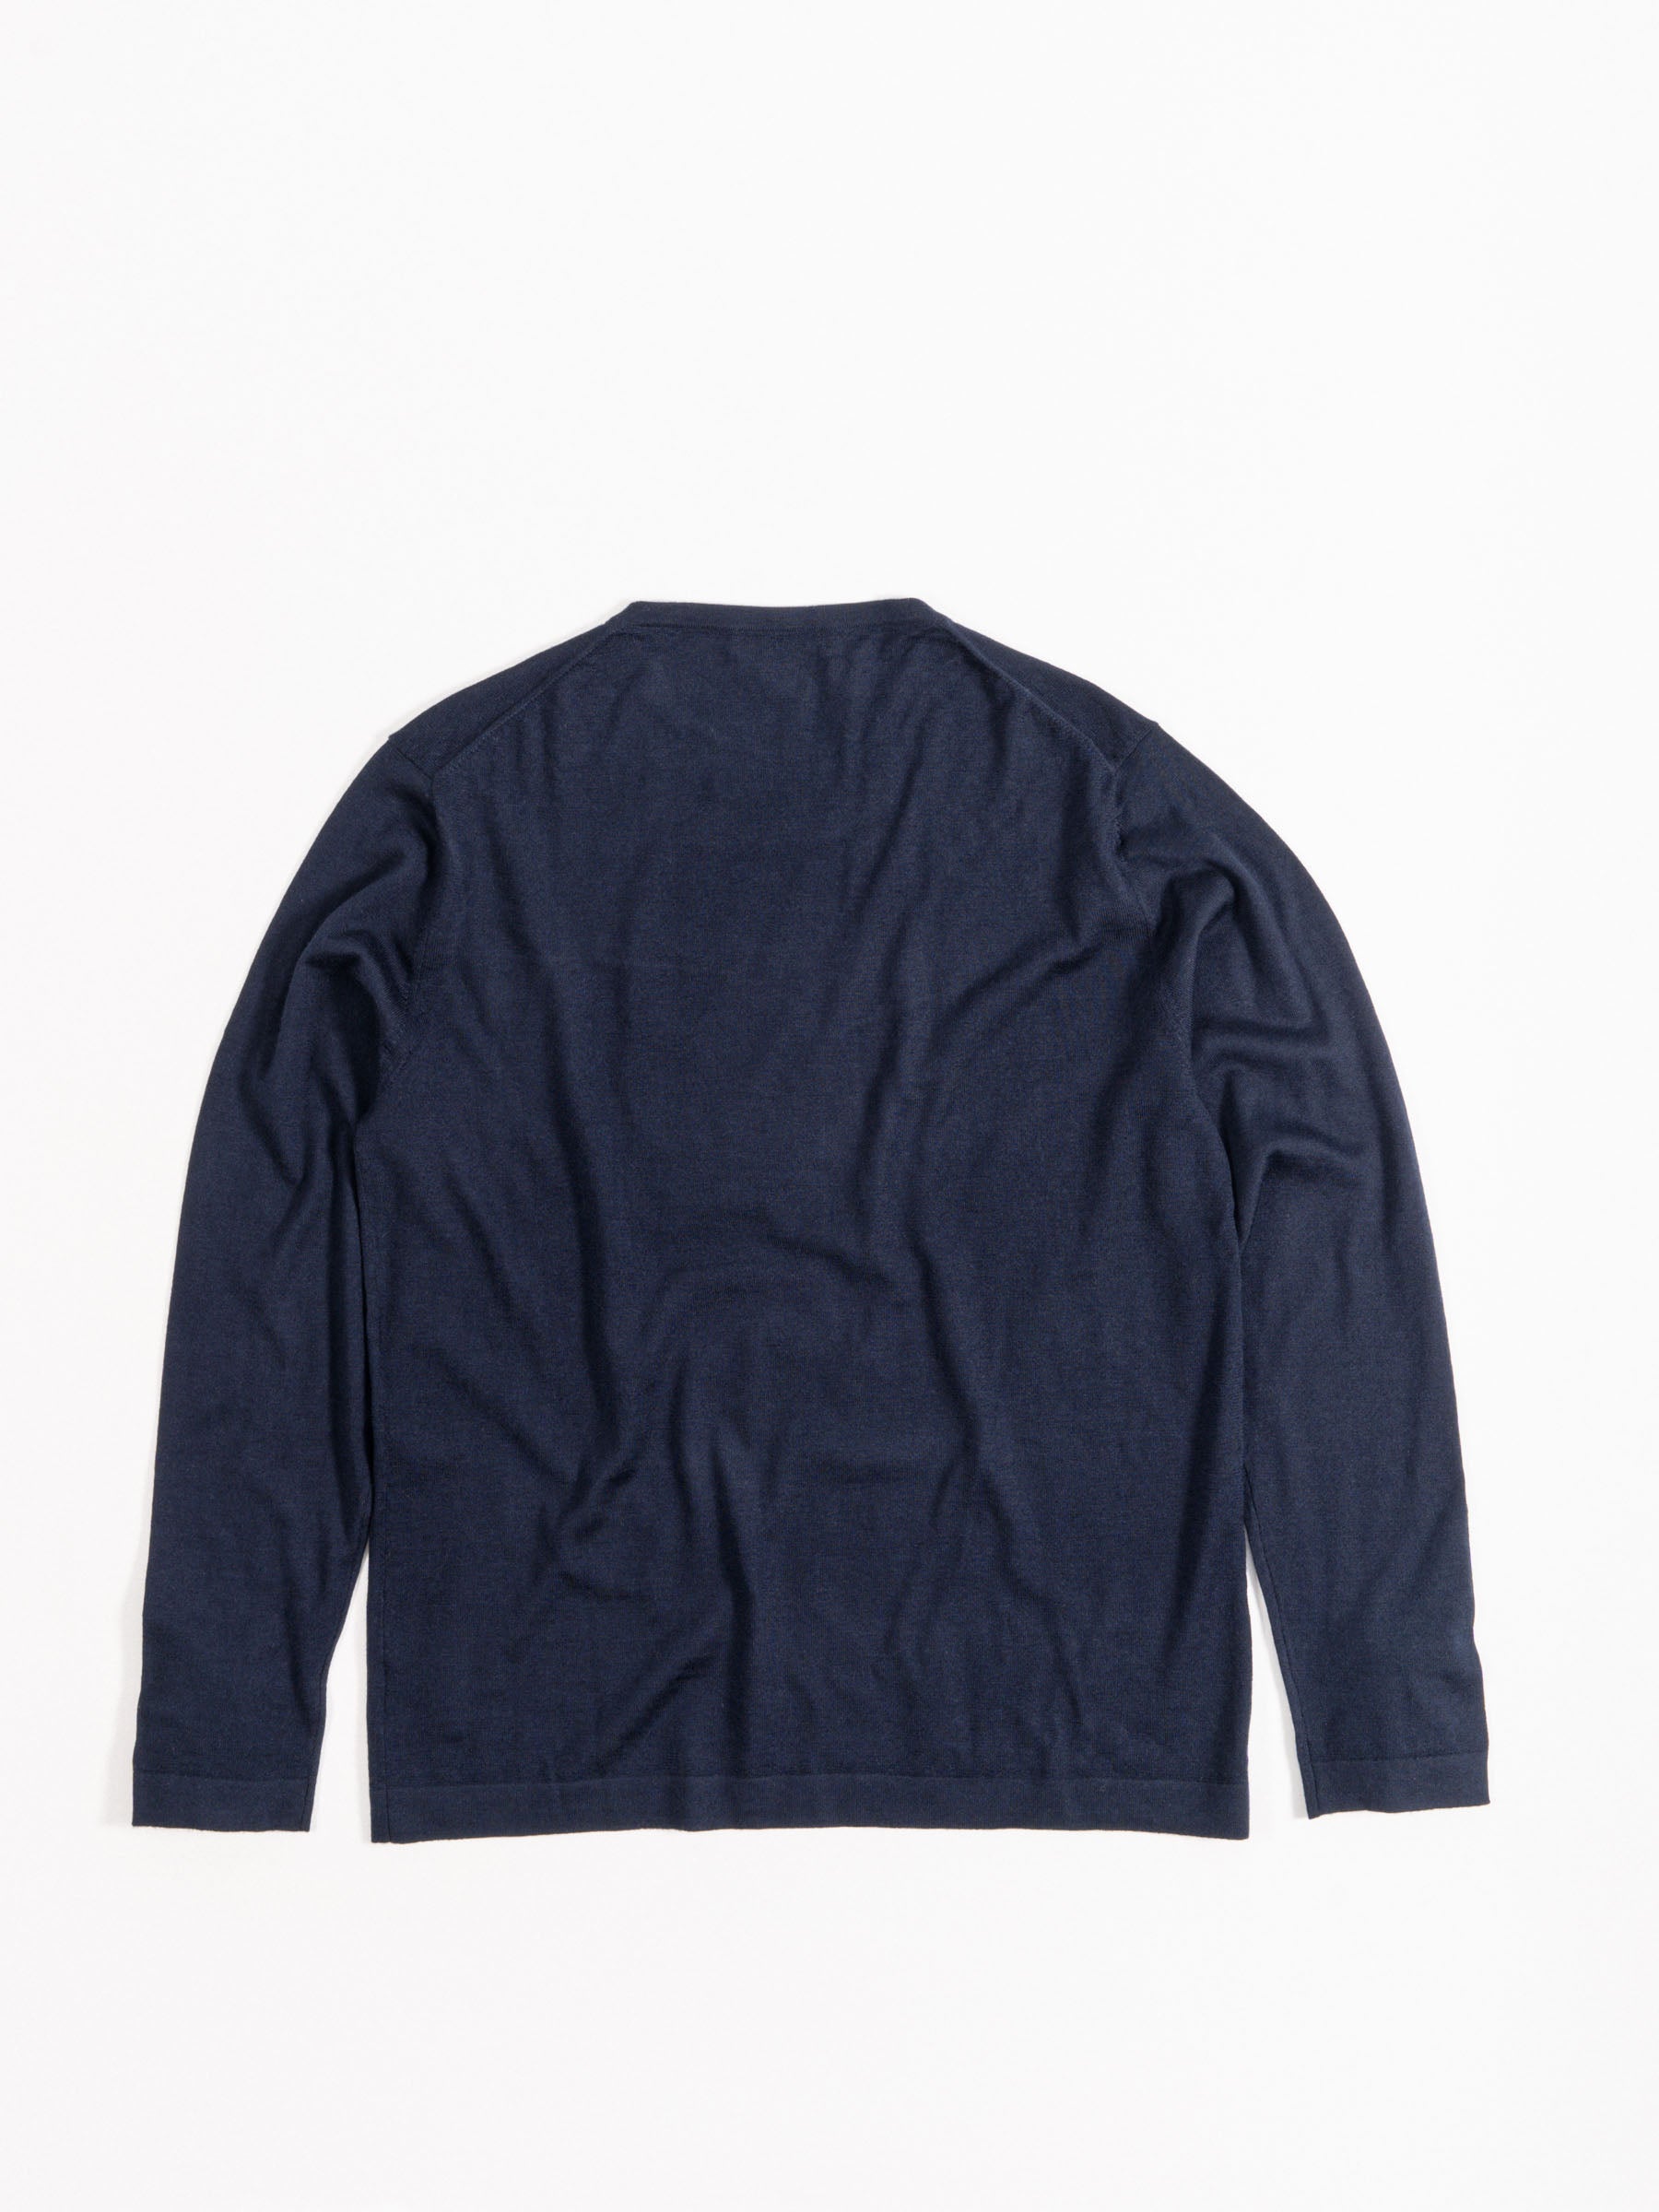 Wool Classic Crewneck Sweater Navy Blue